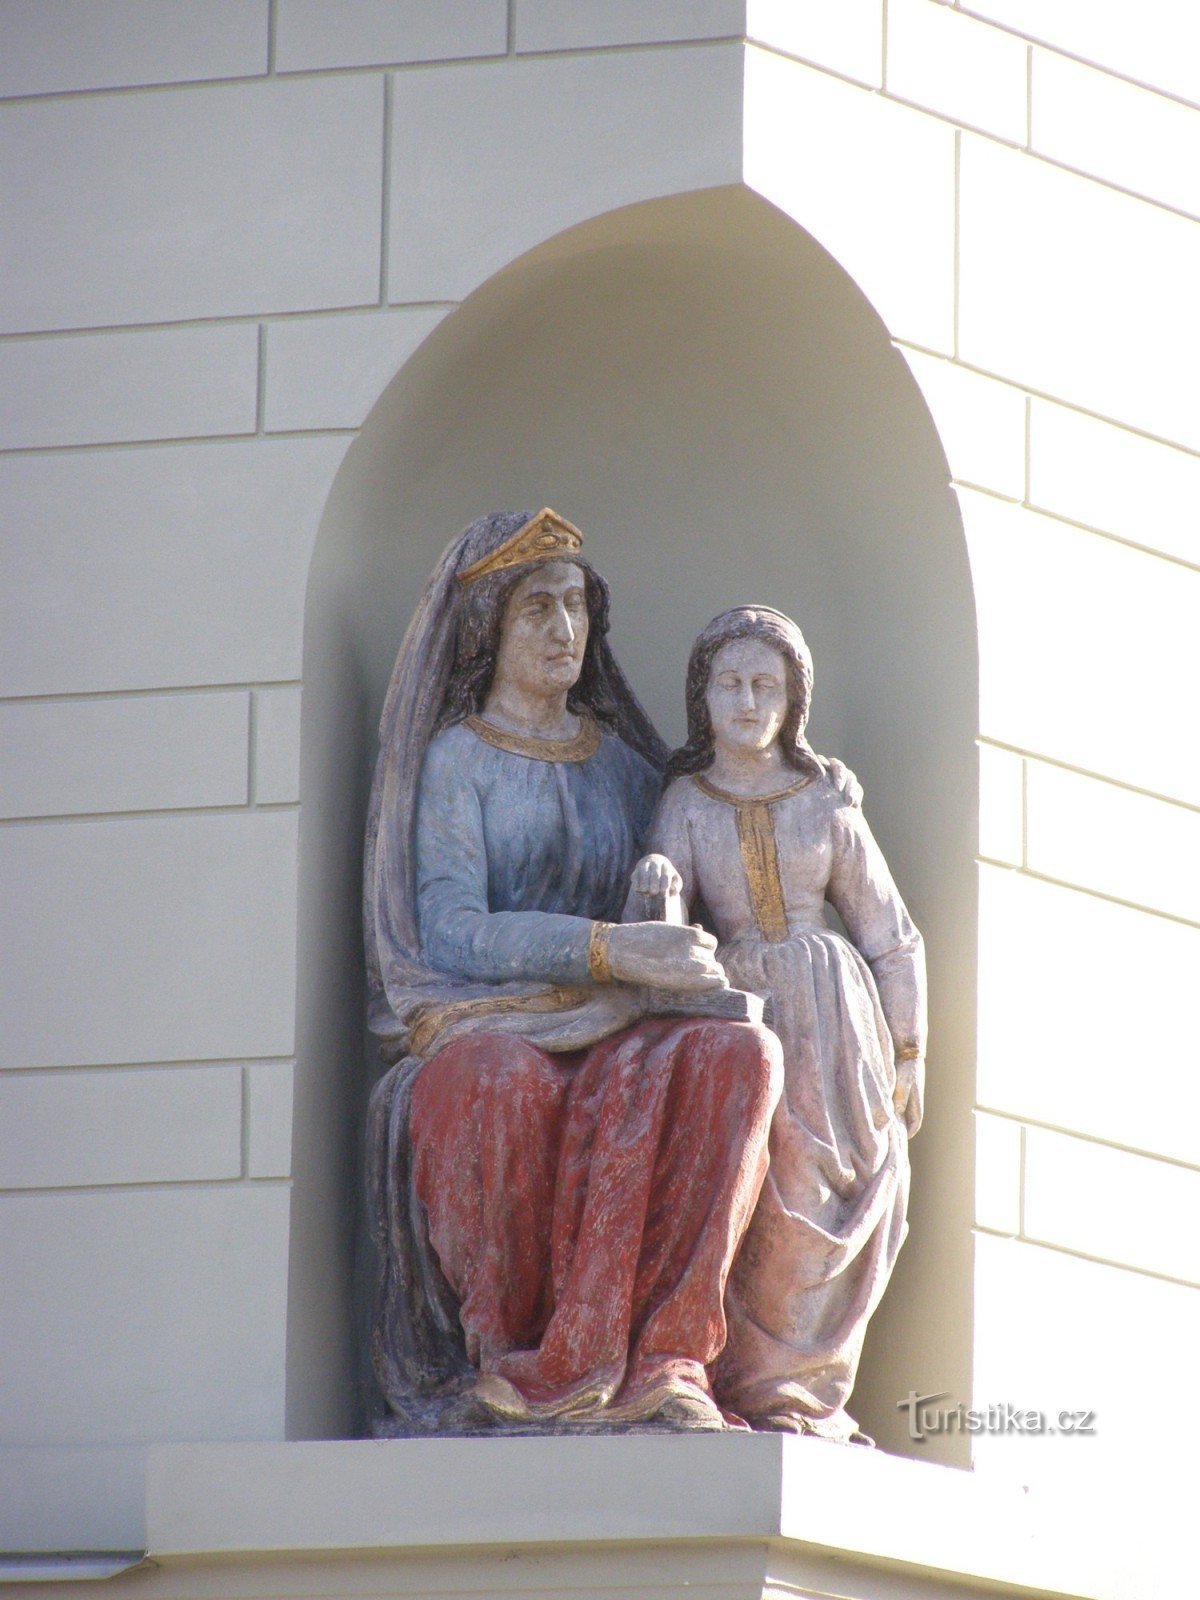 Týnec nad Labem - casa burgherului nr. 74 cu statuia Sf. Ana și Fecioara Maria